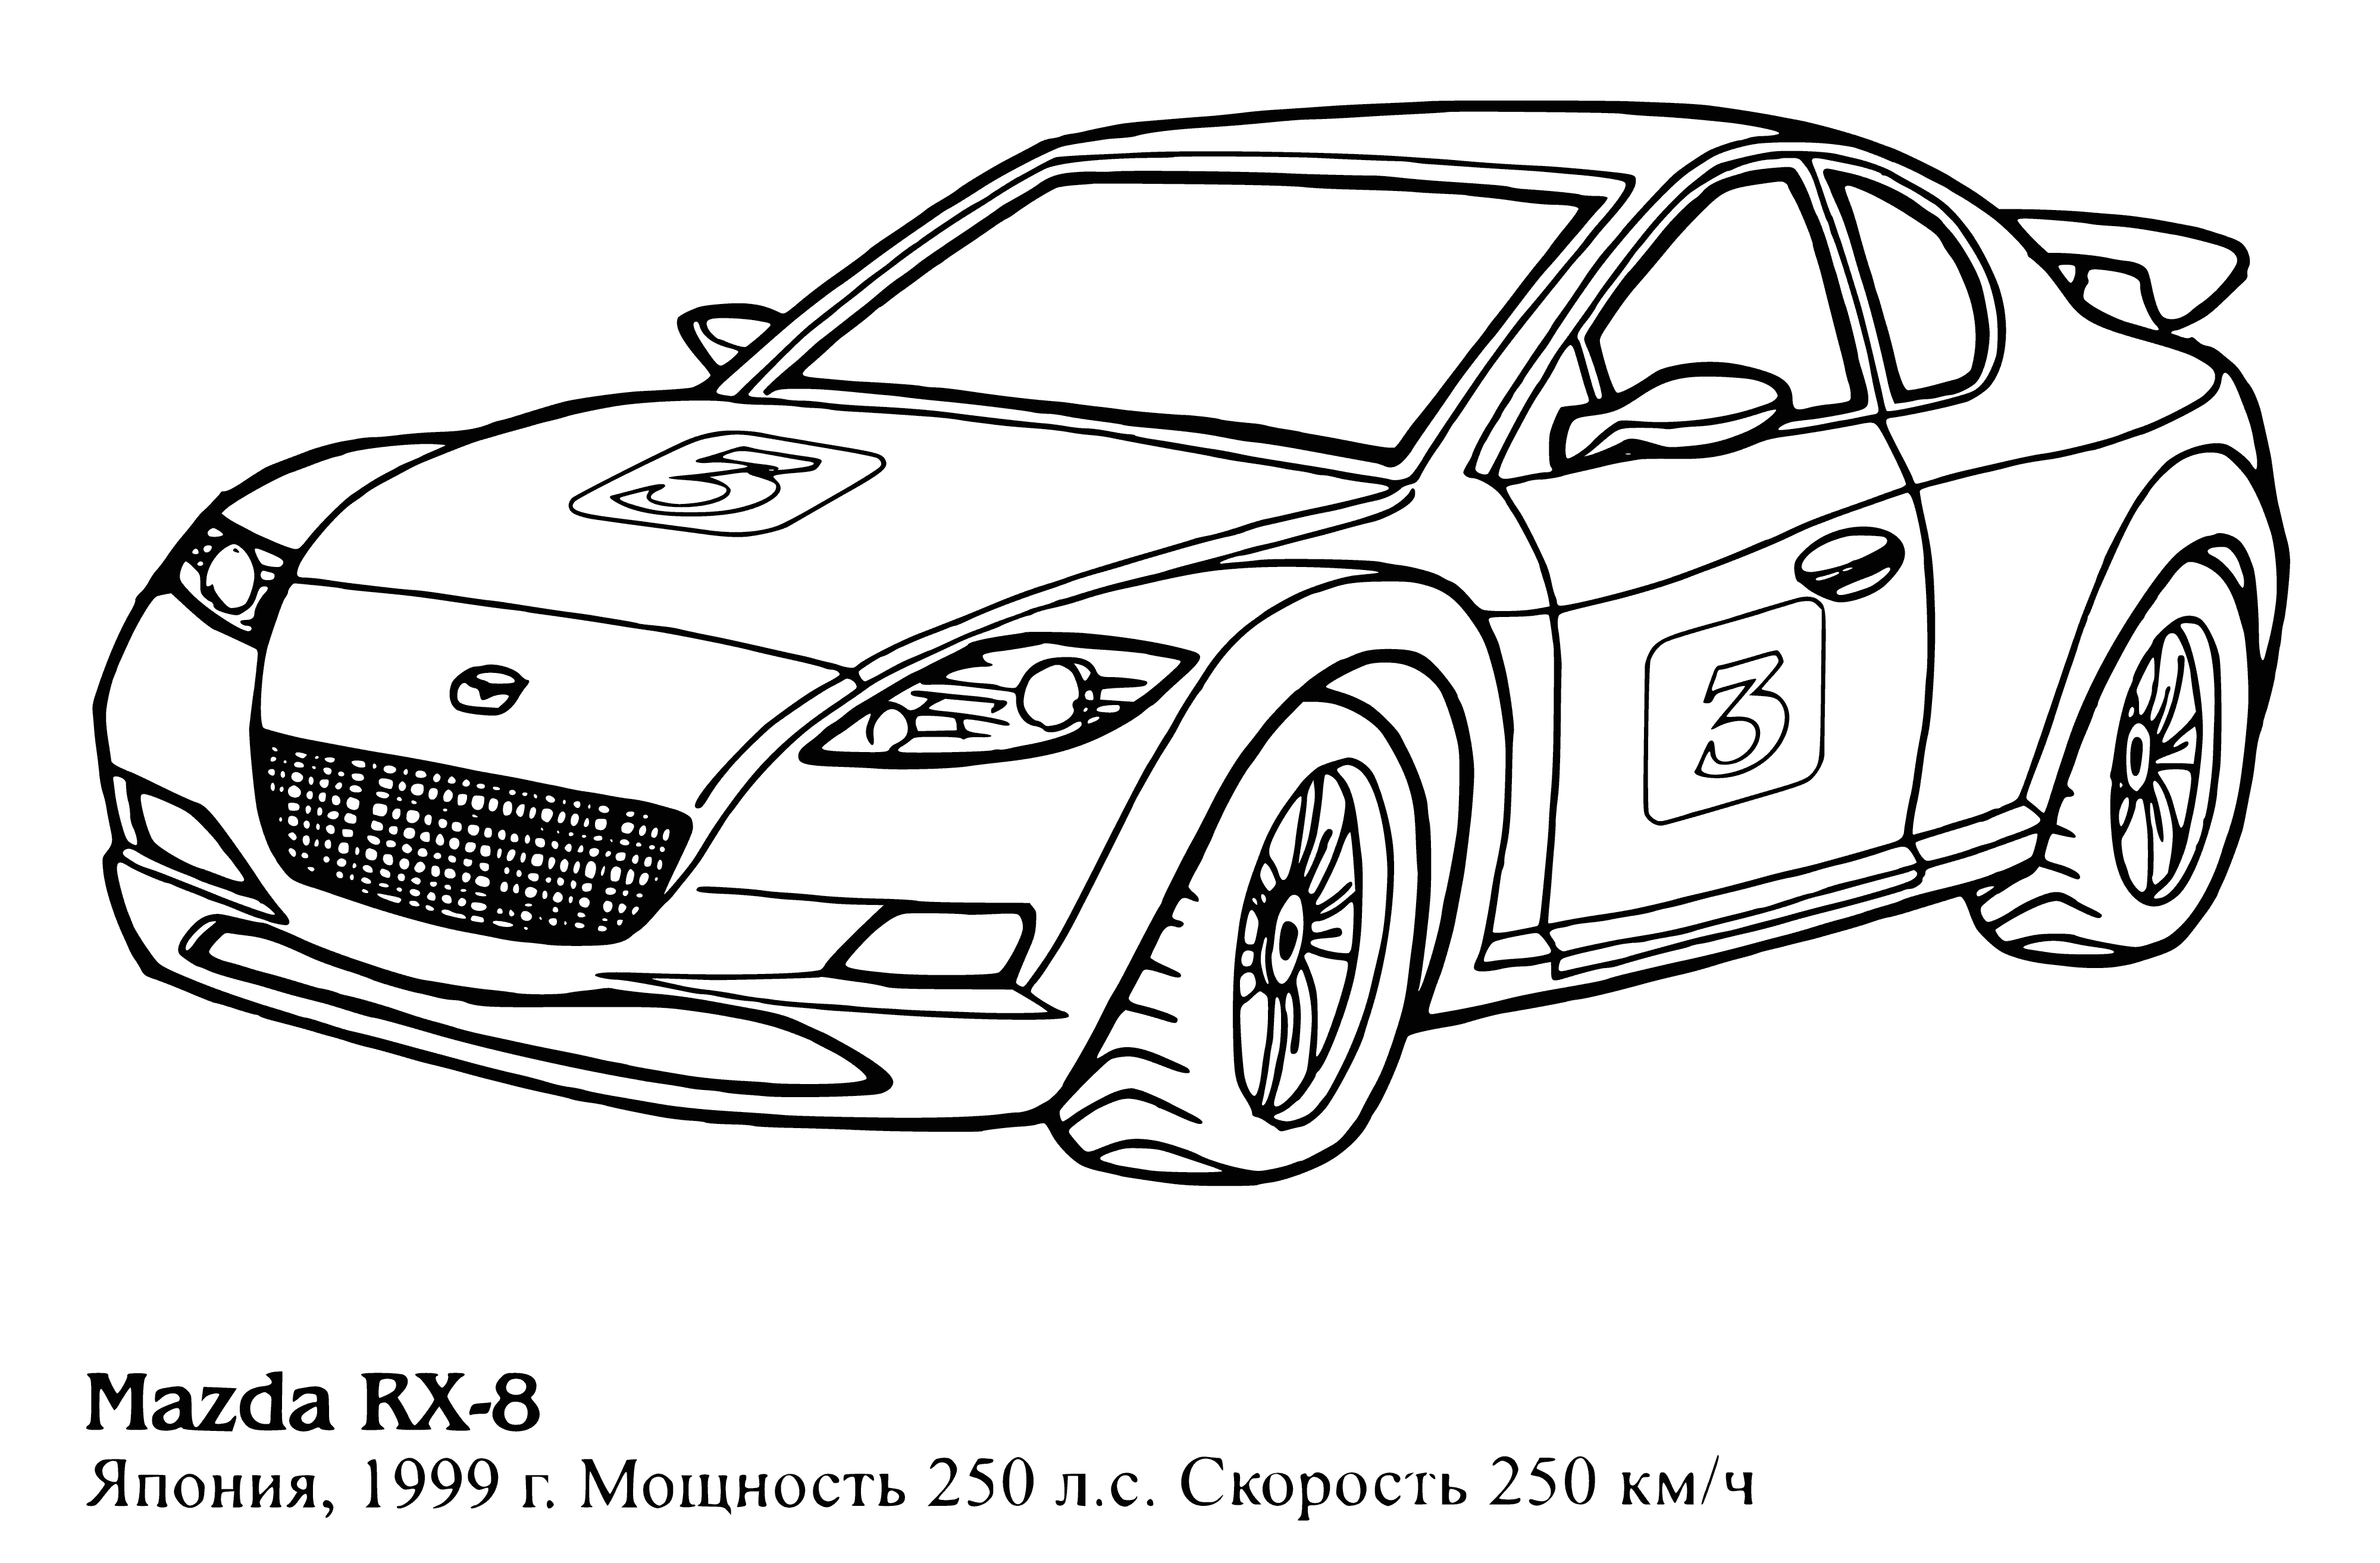 Mazda RX-8 boyama sayfası